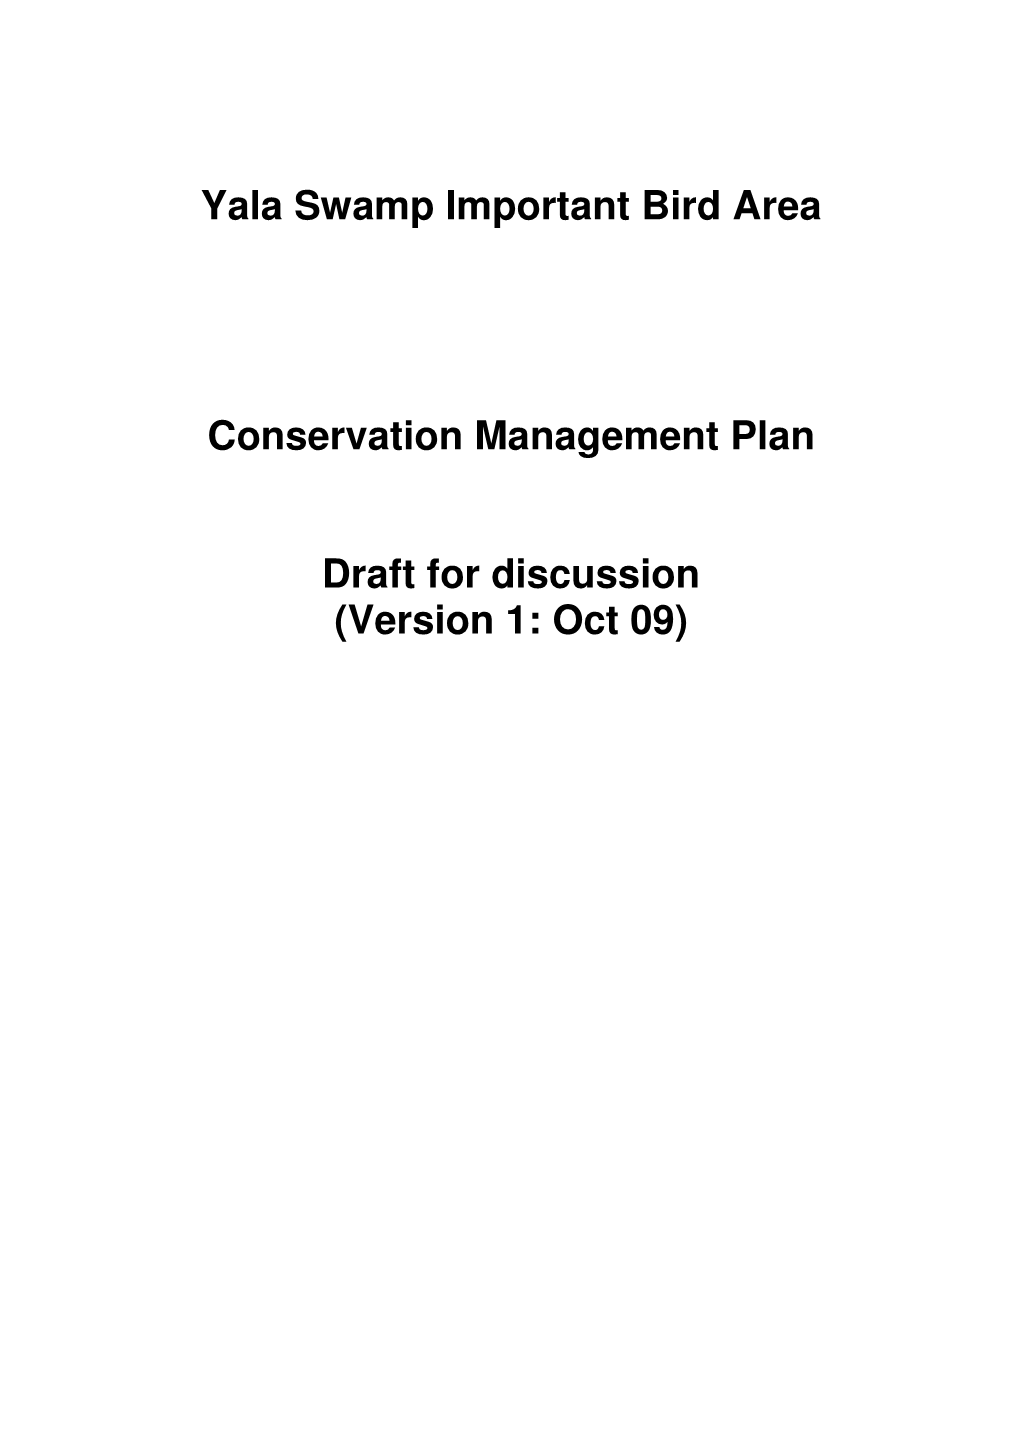 Yala Swamp Important Bird Area Conservation Management Plan